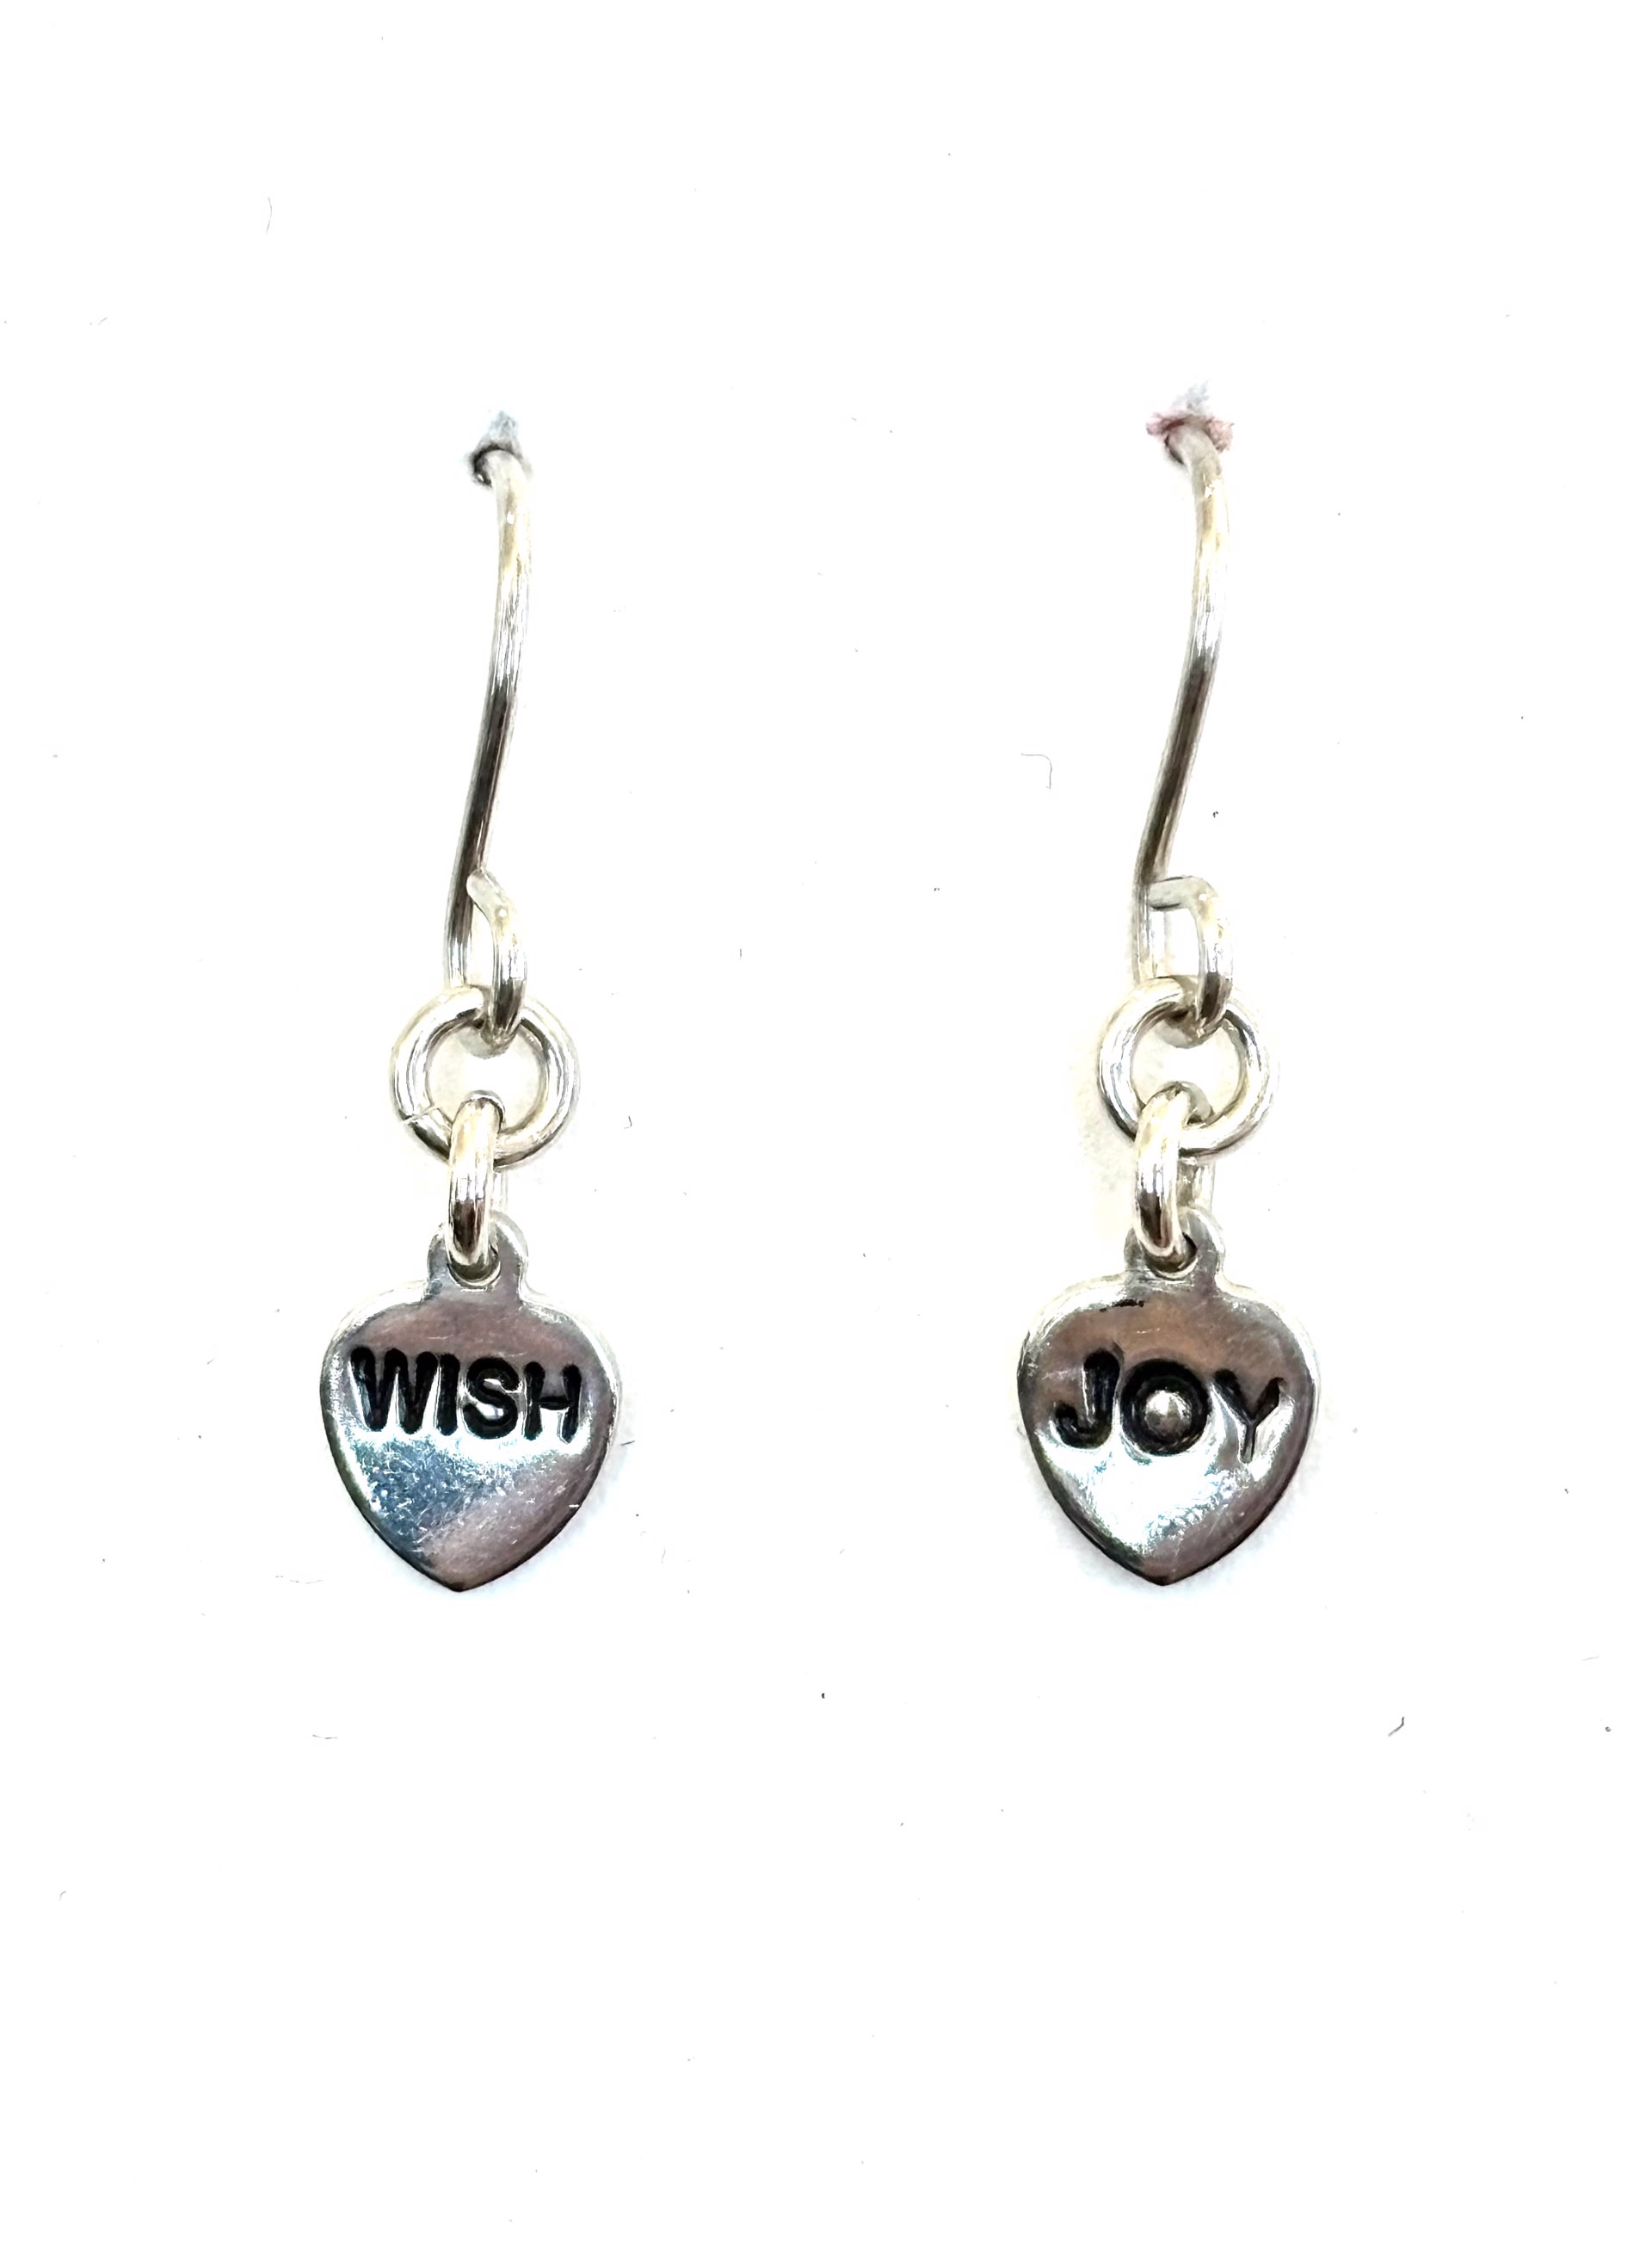 Wish Joy Mantra Earrings by Emelie Hebert